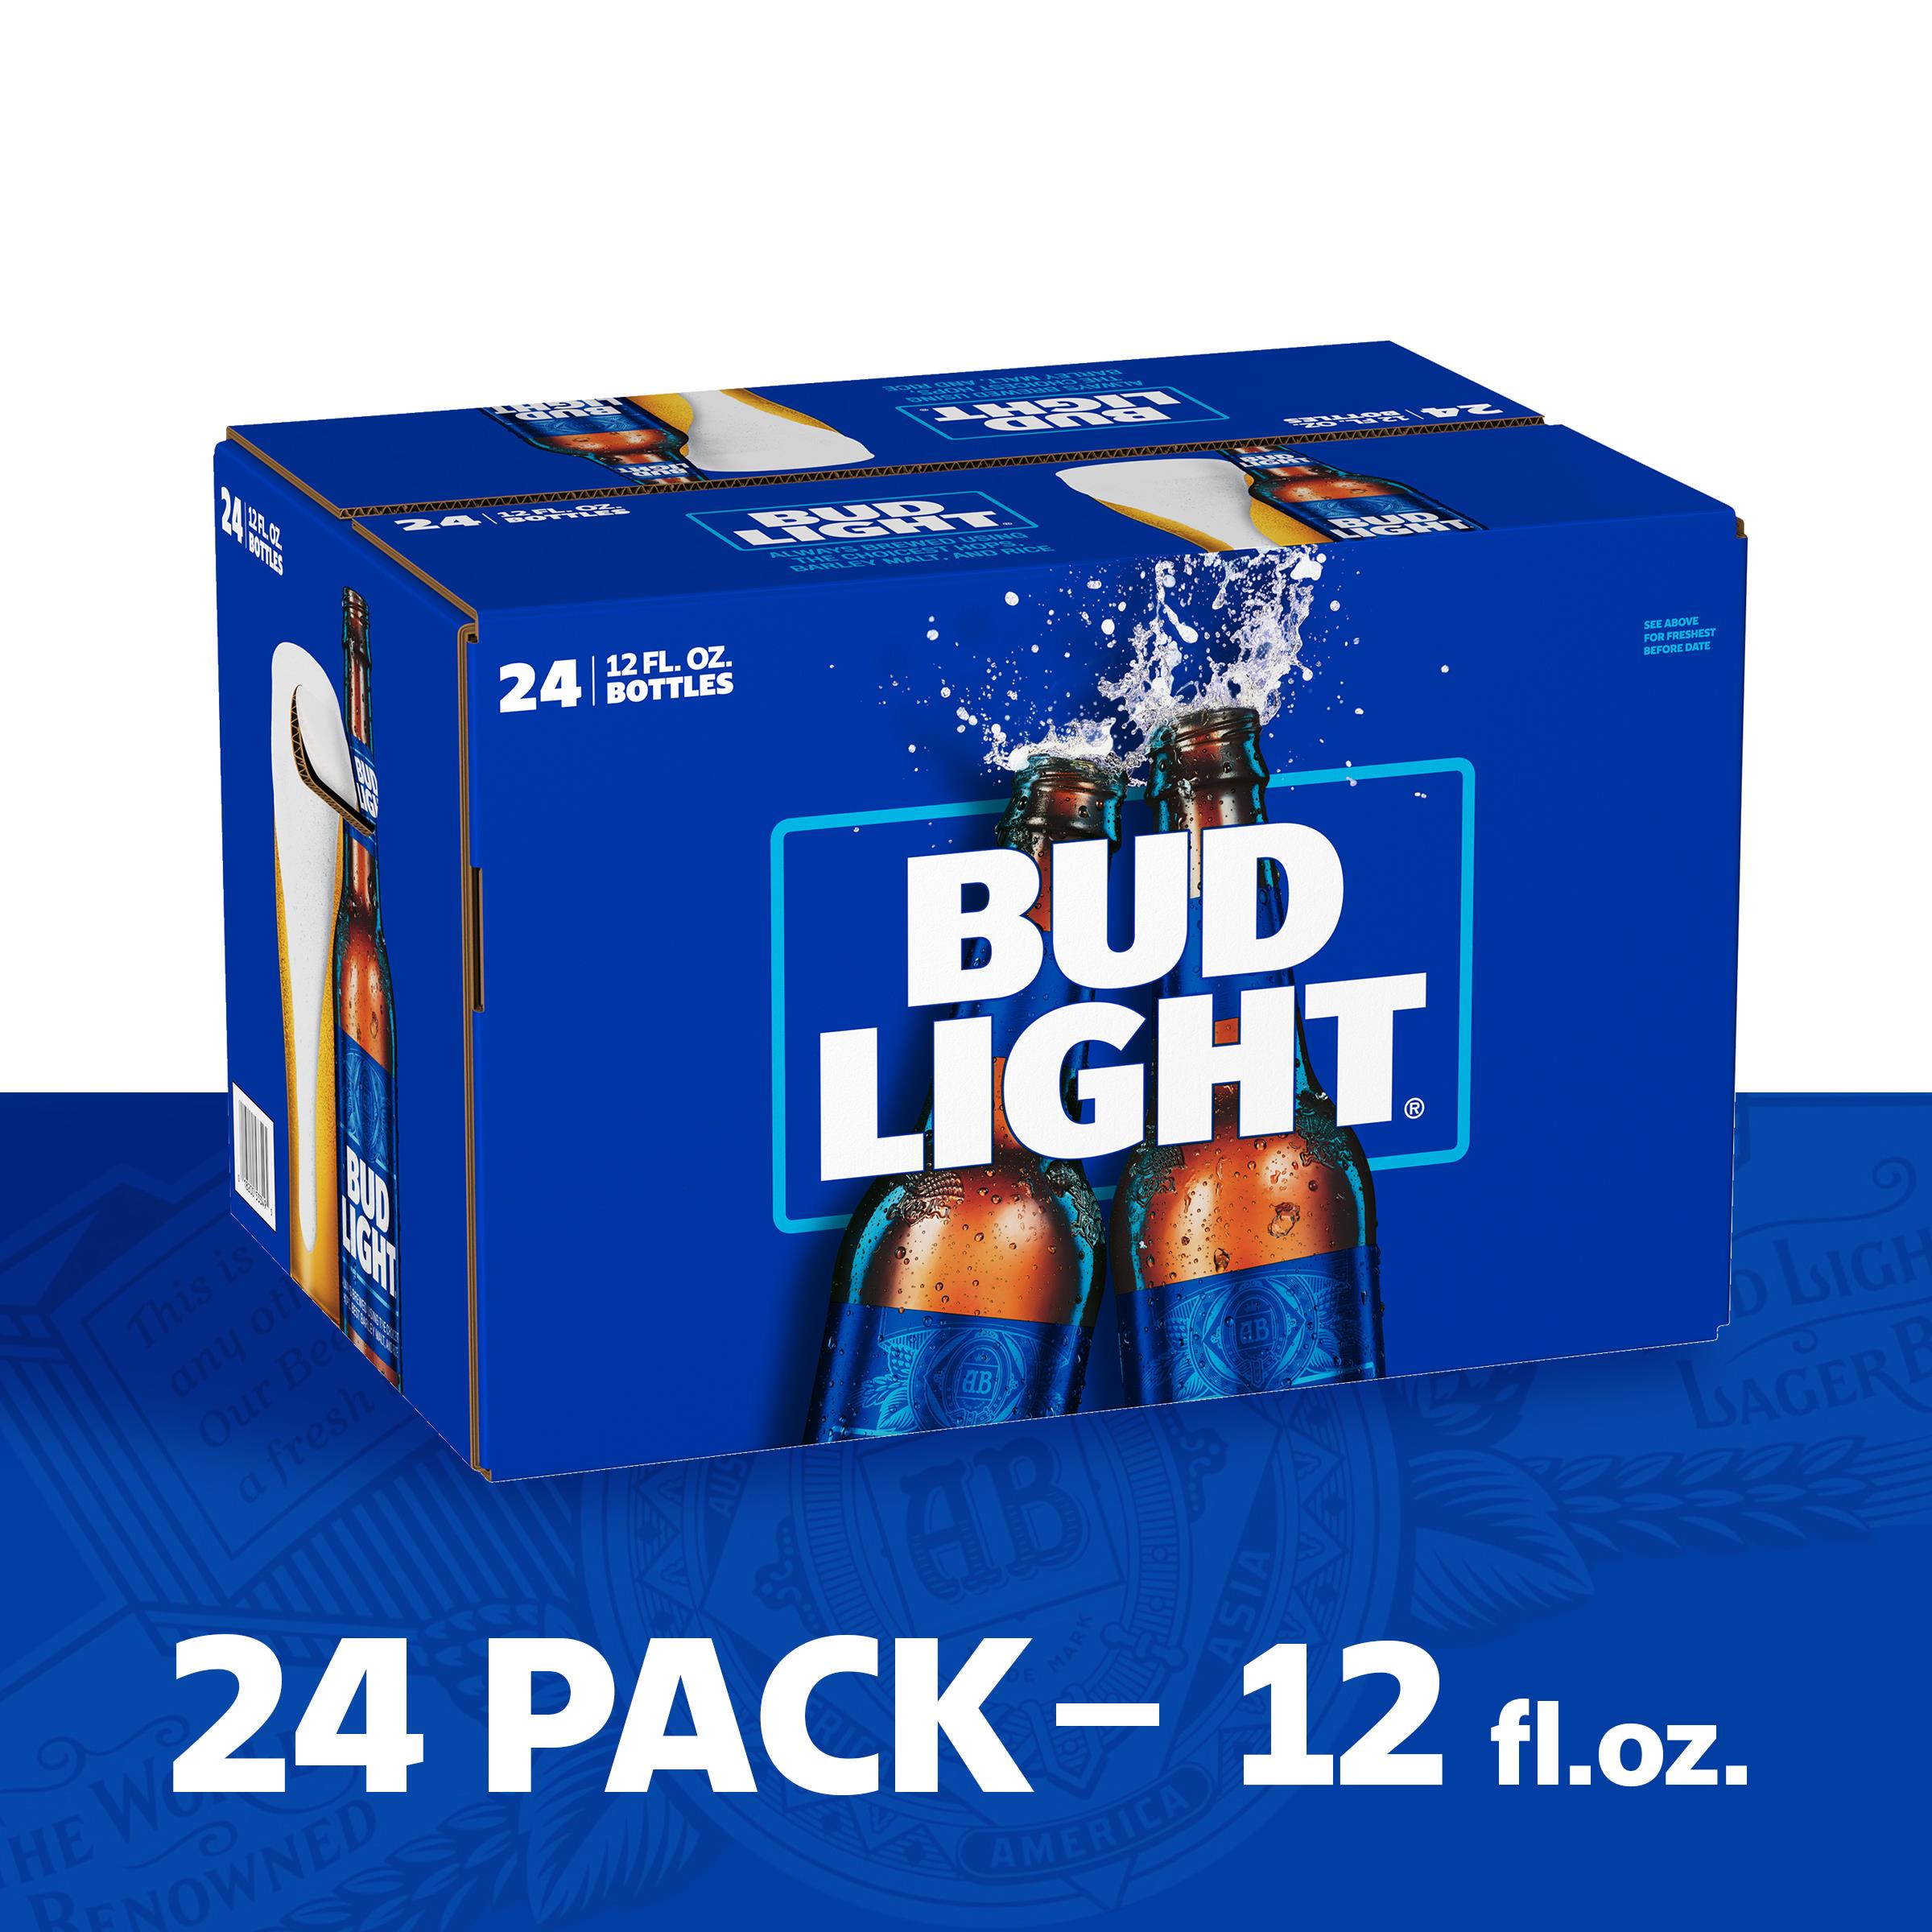 Bud Light Beer 24 Pack Beer 12 FL OZ Bottles Walmart Walmart